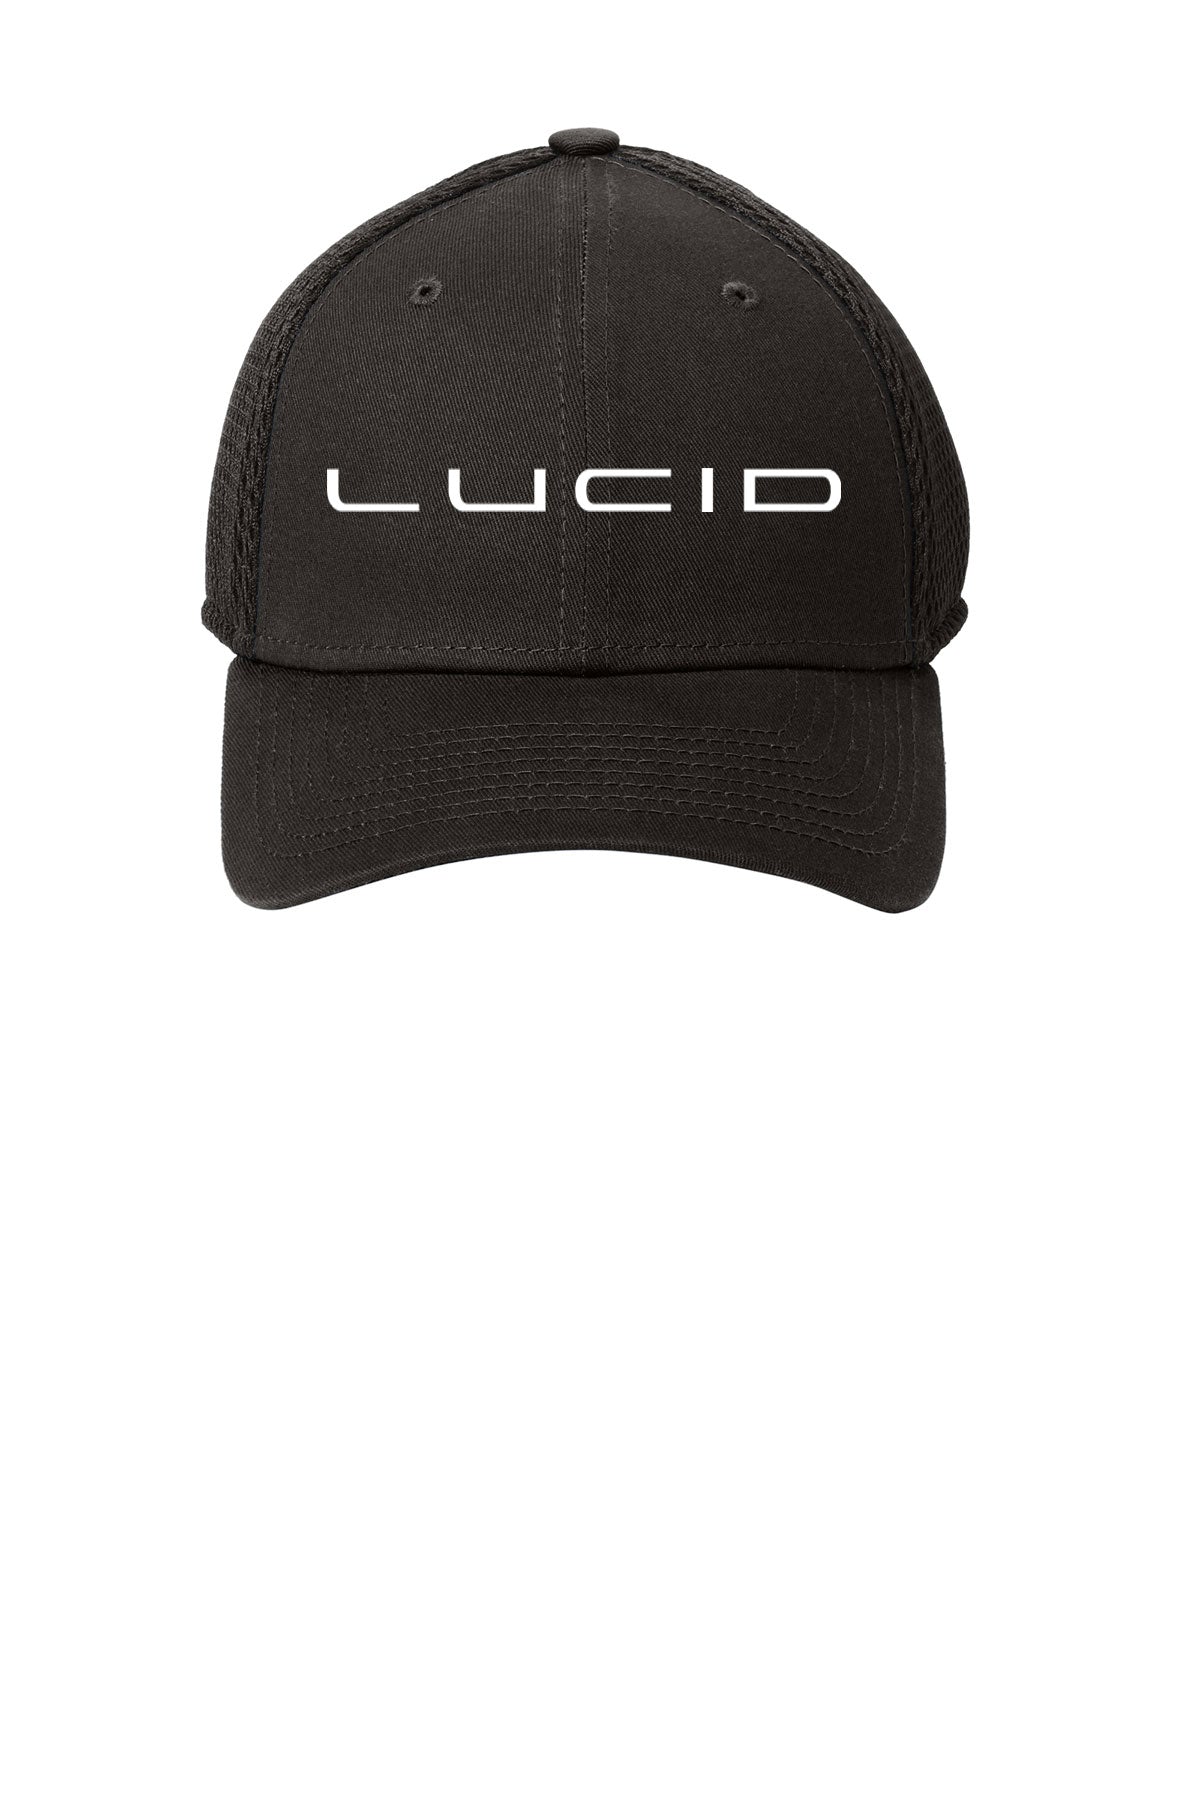 New Era Stretch Mesh Customized Caps, Black [Lucid Motors]